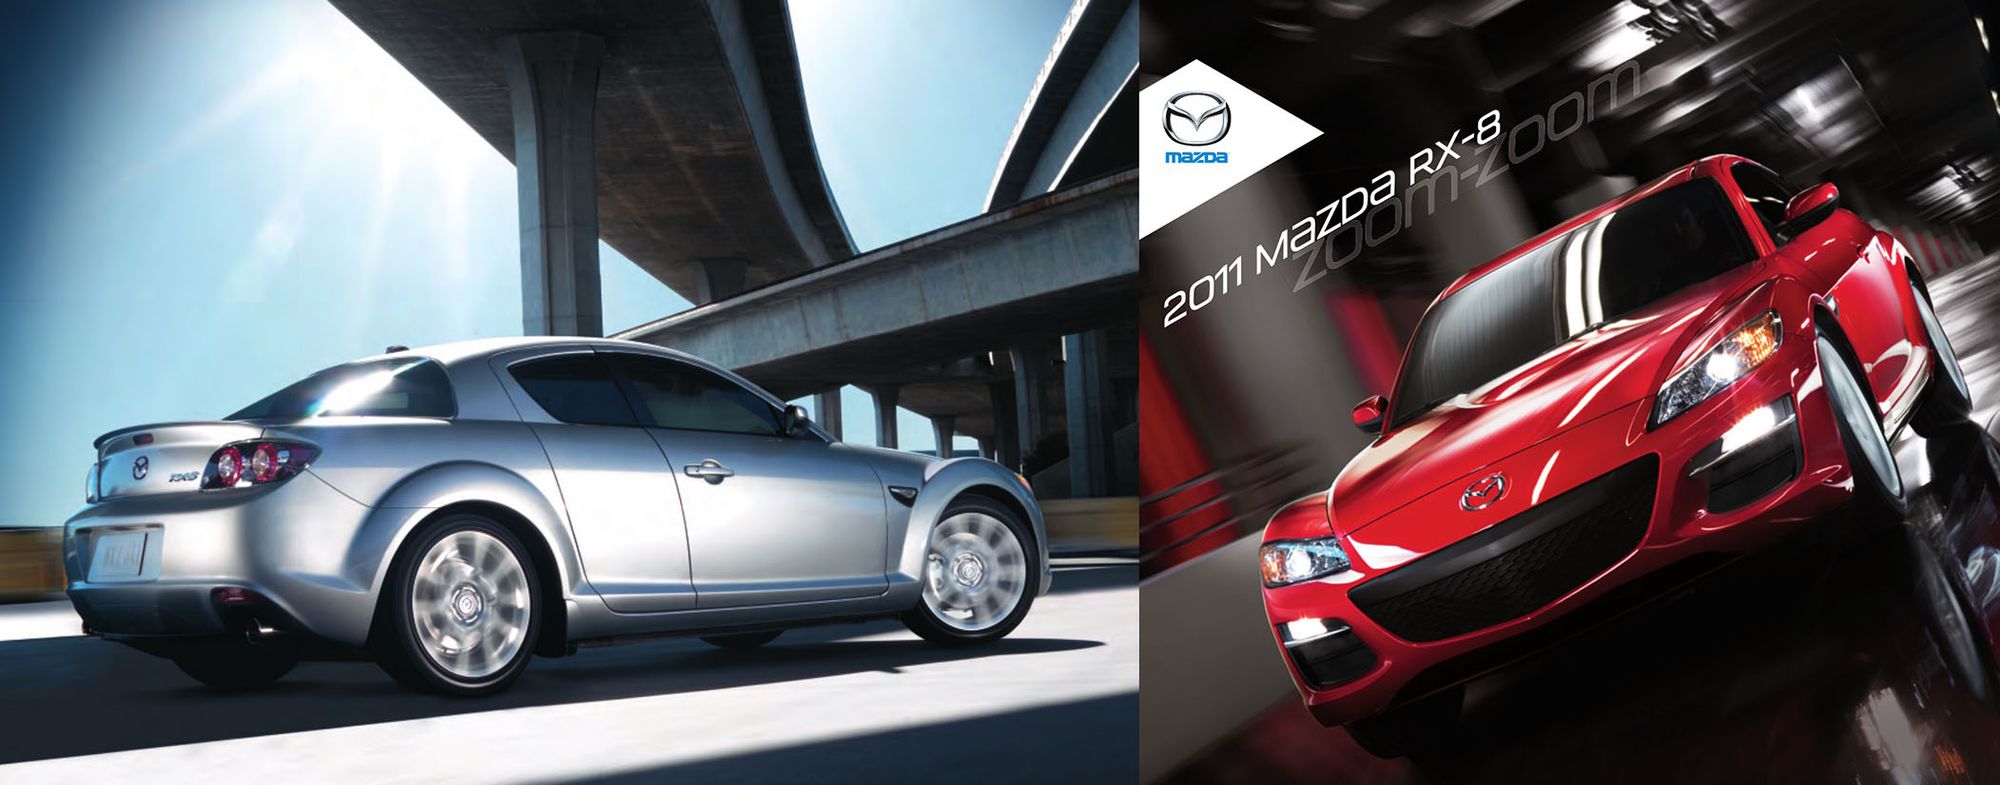 Mazda RX-8 restyling - brochure del 2011